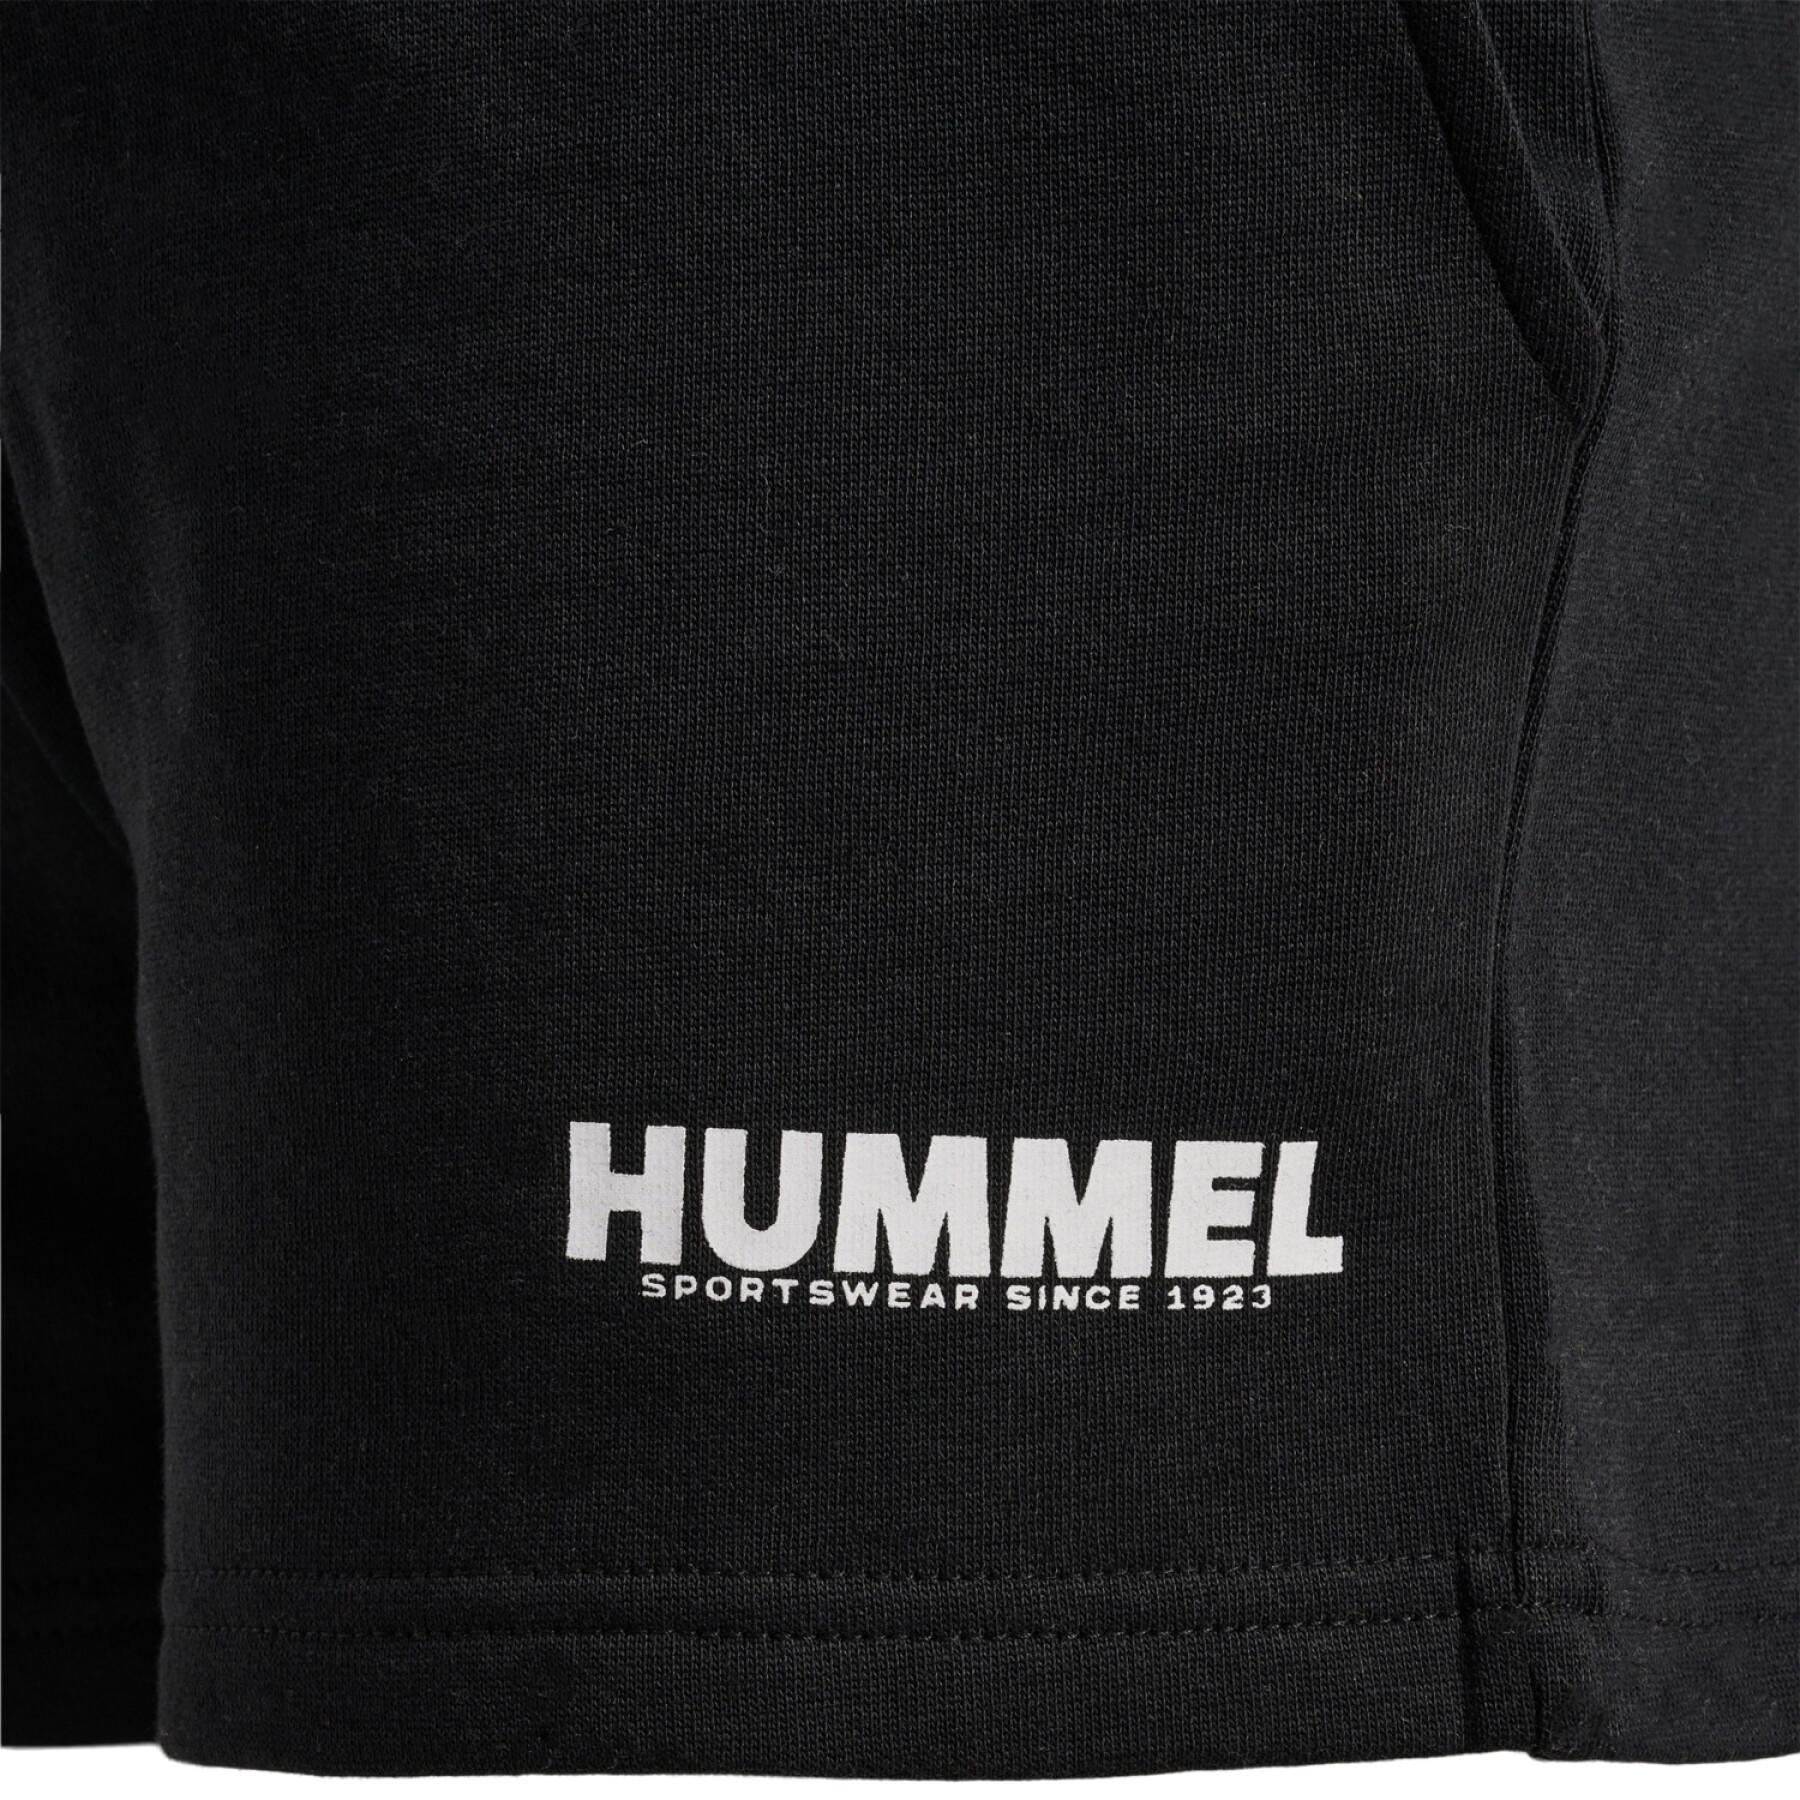 Women\'s shorts Hummel Legacy - Hummel - Brands - Lifestyle